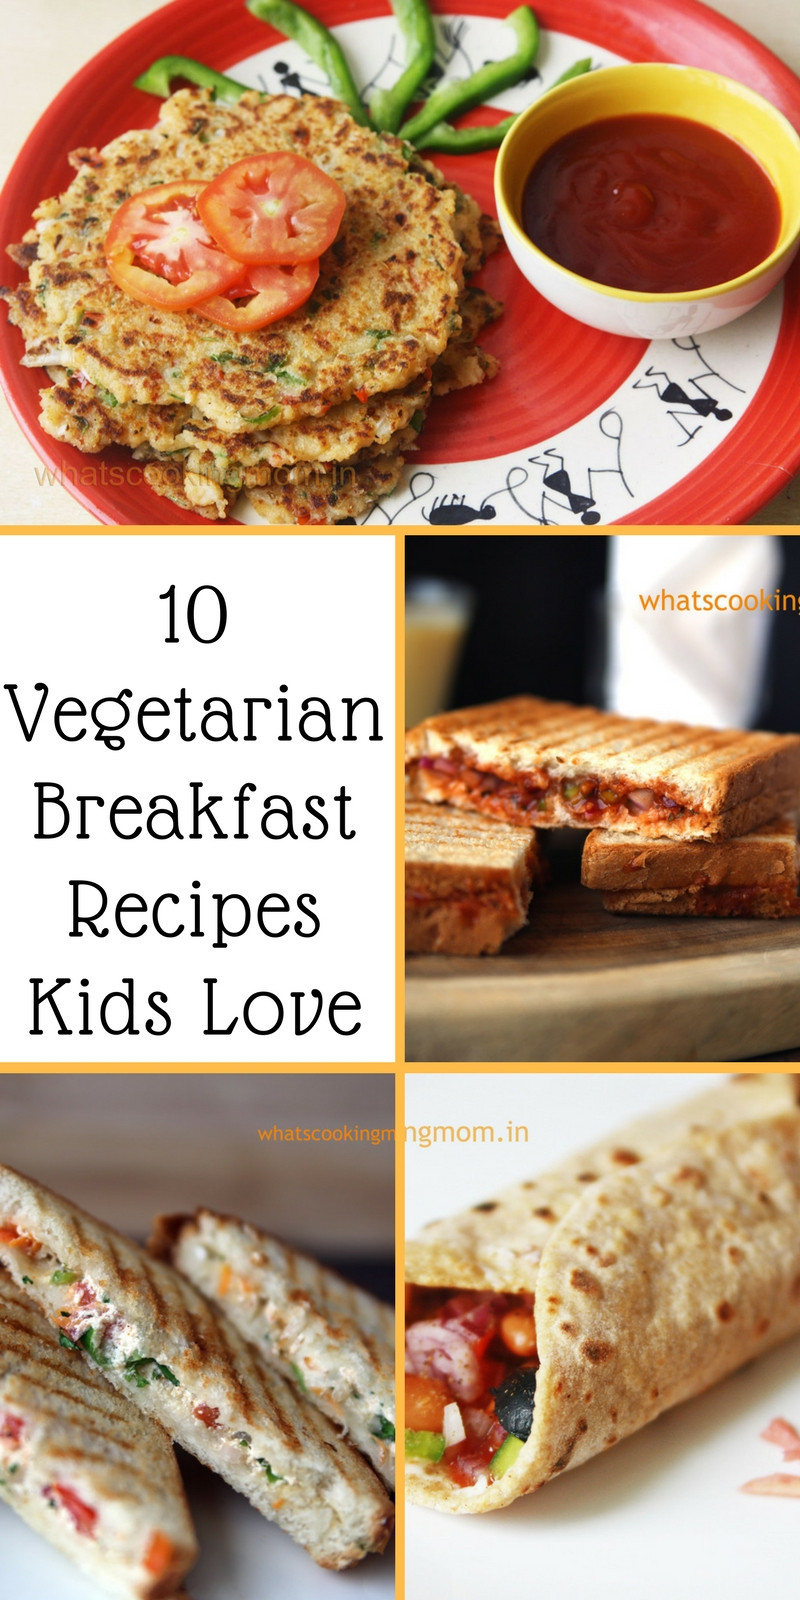 Vegetarian Breakfast For Kids
 10 ve arian breakfast recipes kids love whats cooking mom